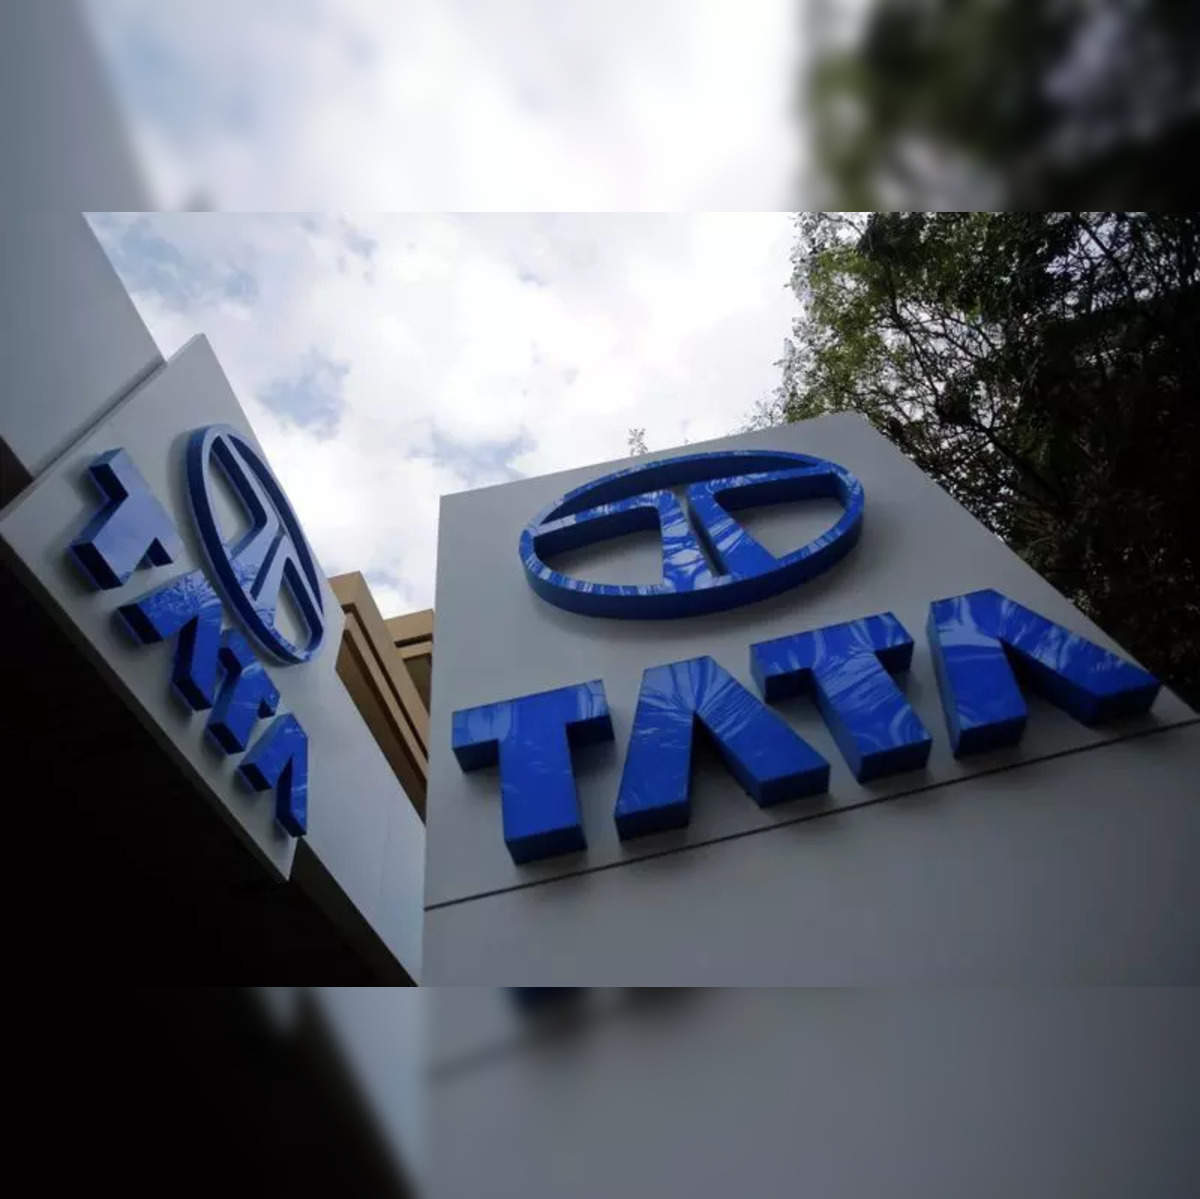 tata 1mg deal: After BigBasket, Tata Digital acquires online